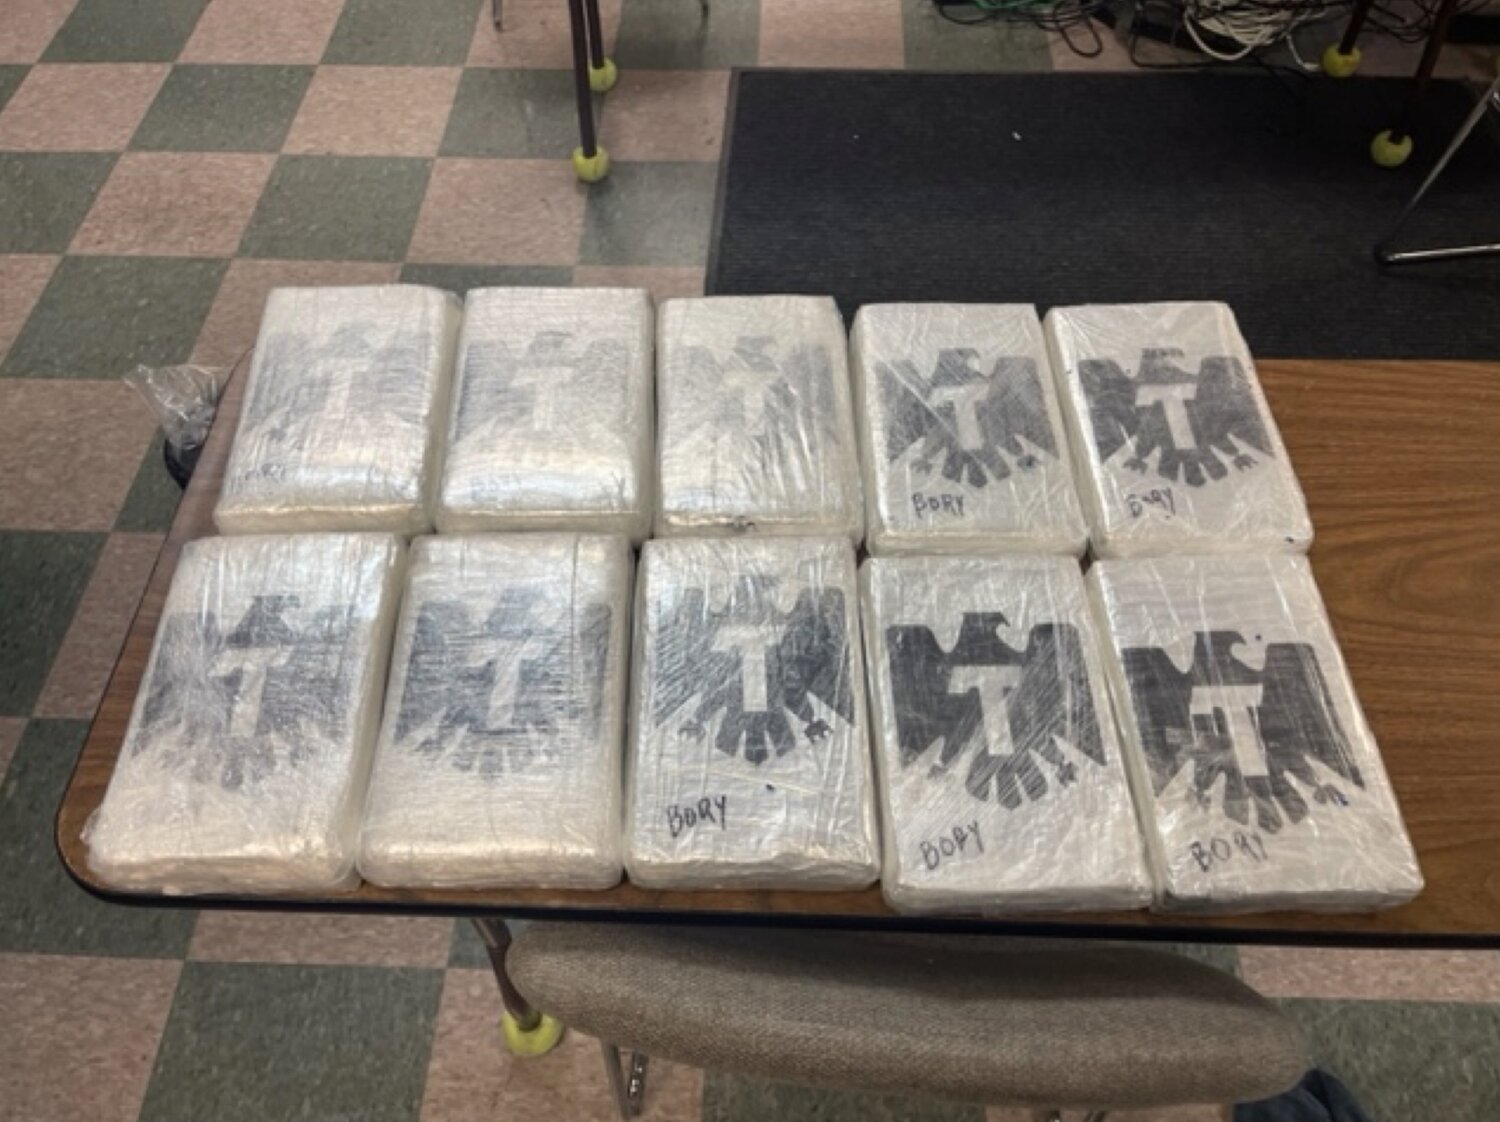 Bricks of cocaine seized by MPD last Thursday evening.